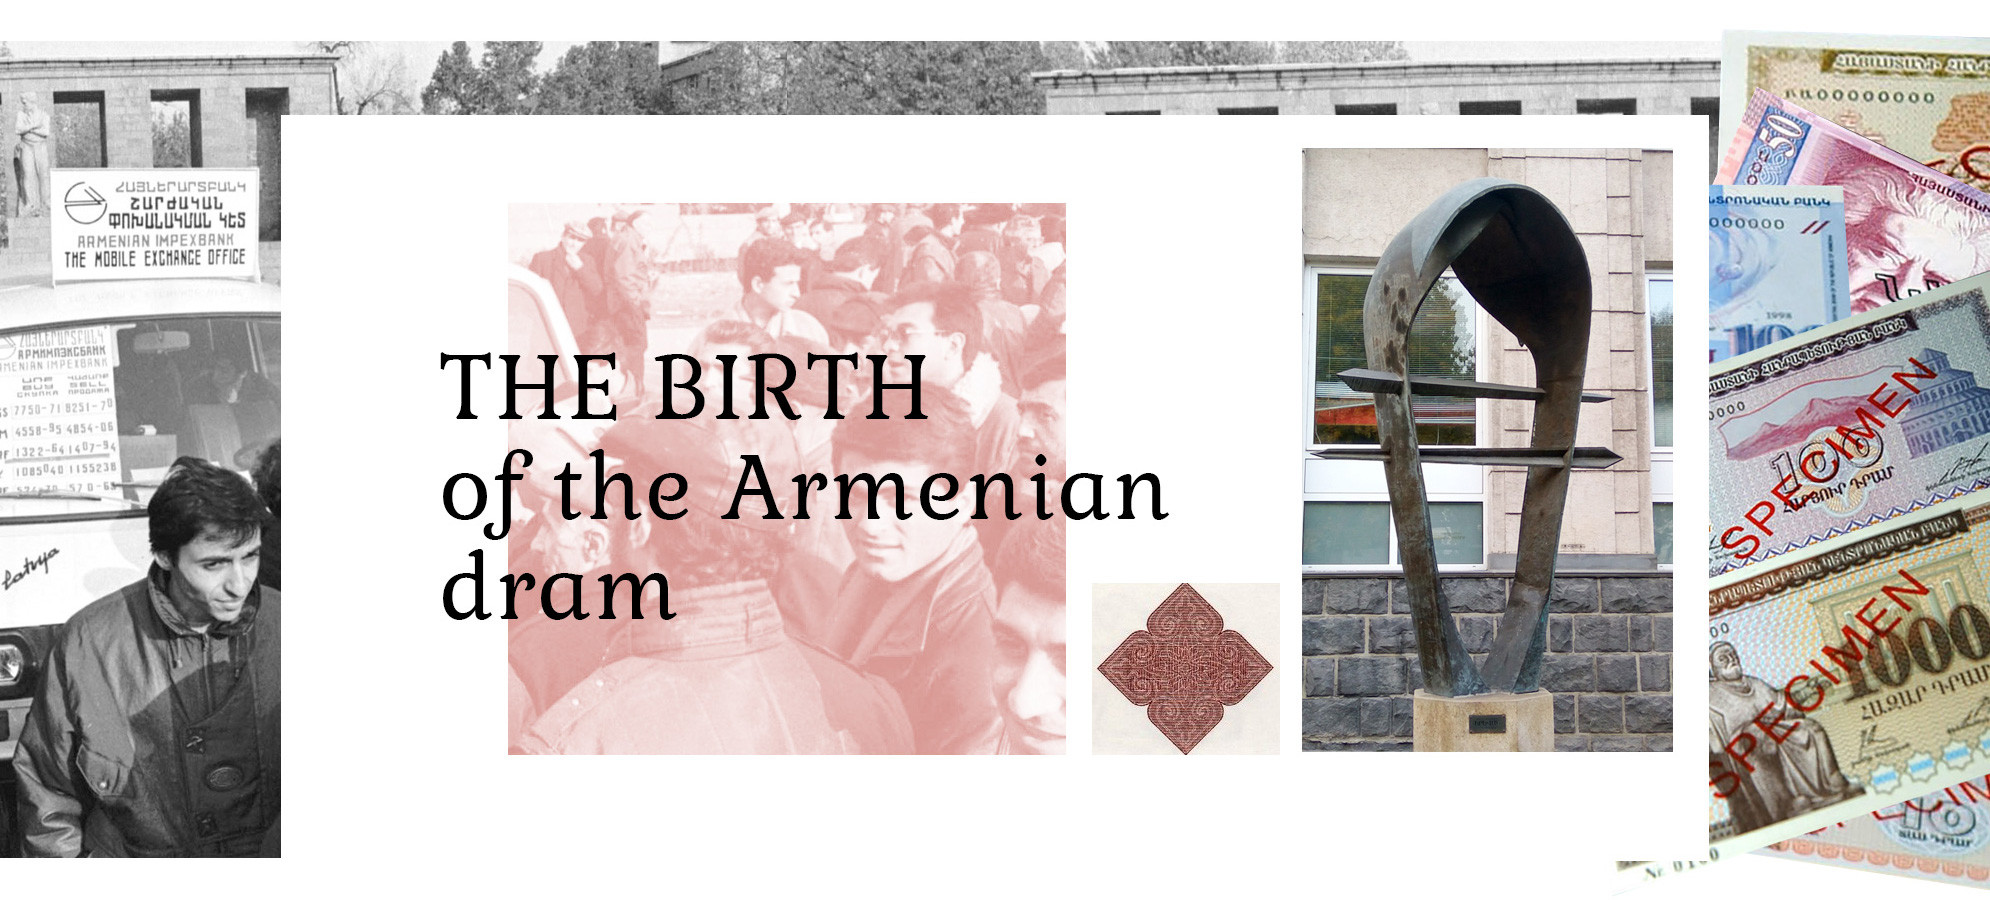 The birth of the Armenian dram